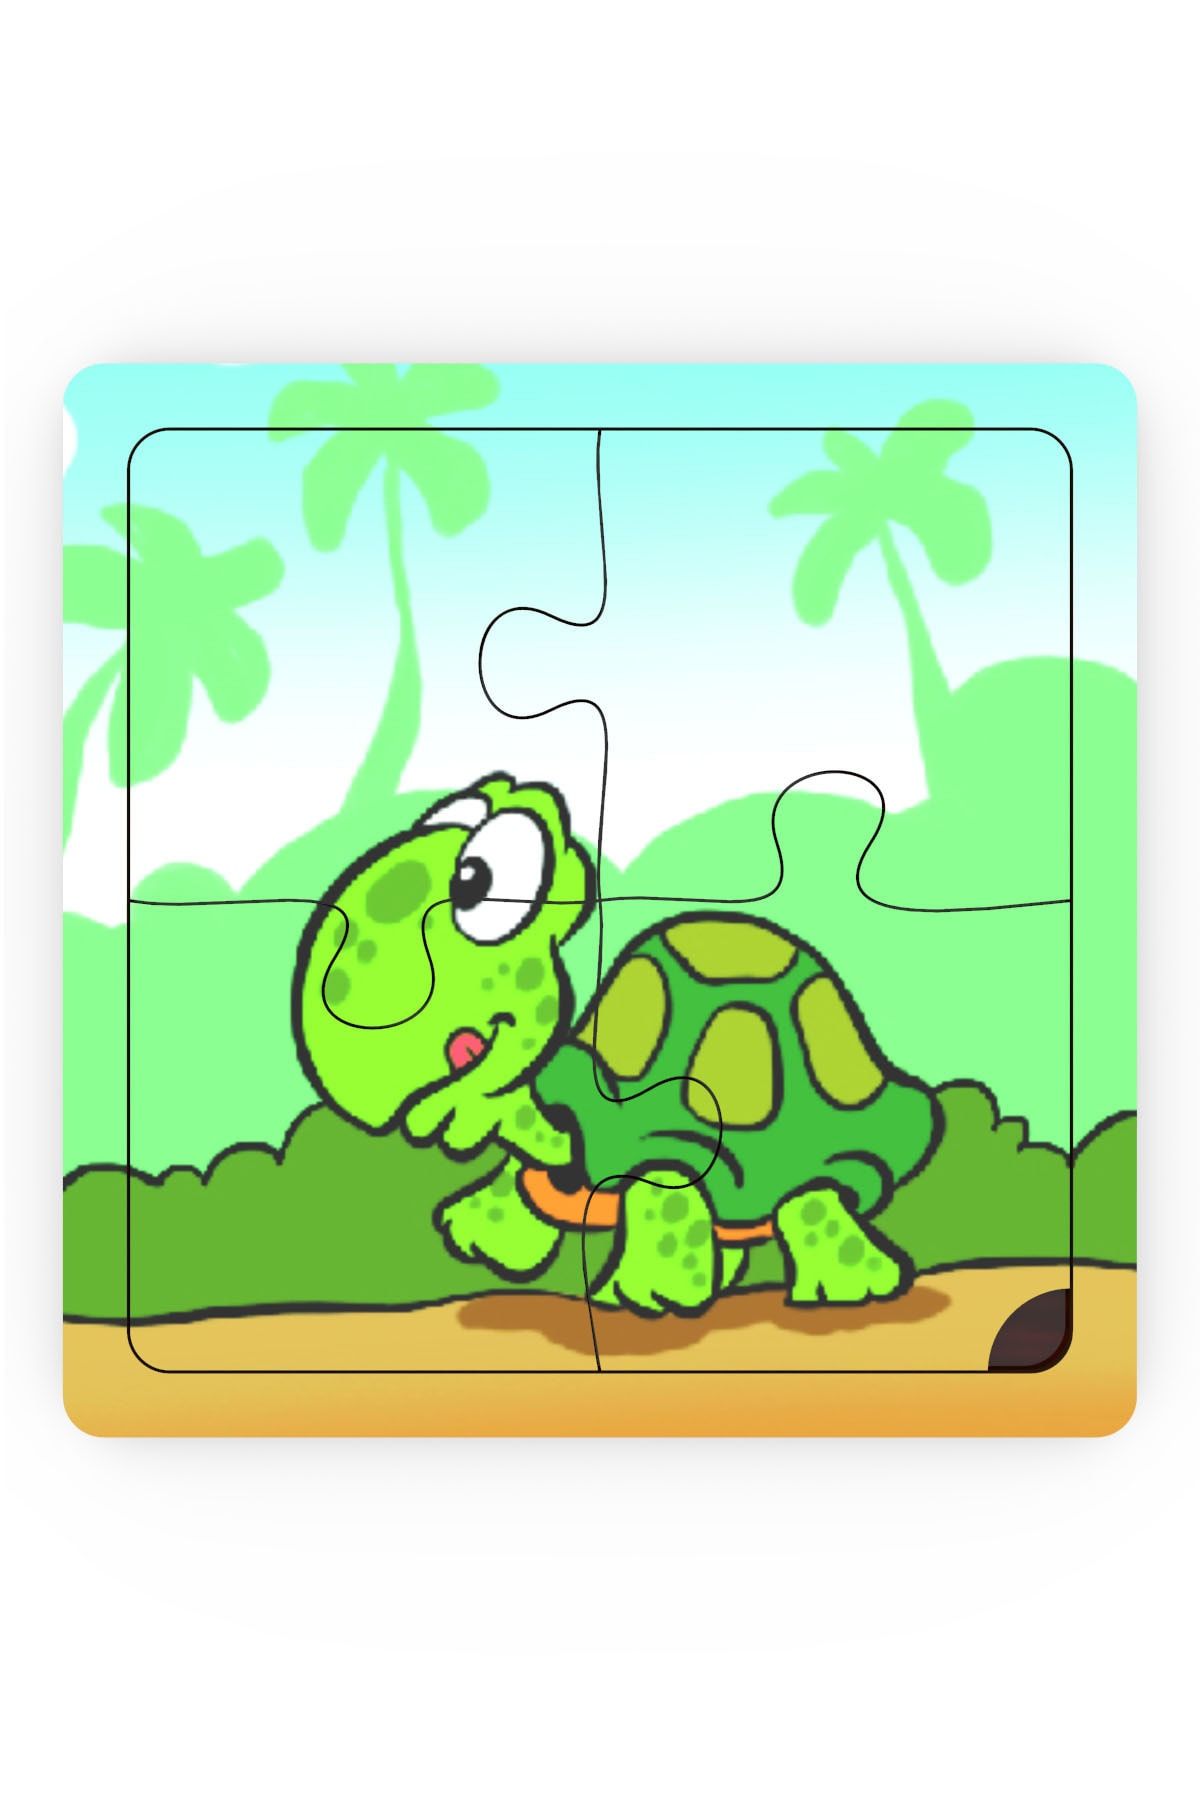 12-Piece Mini Puzzle - Turtles Together